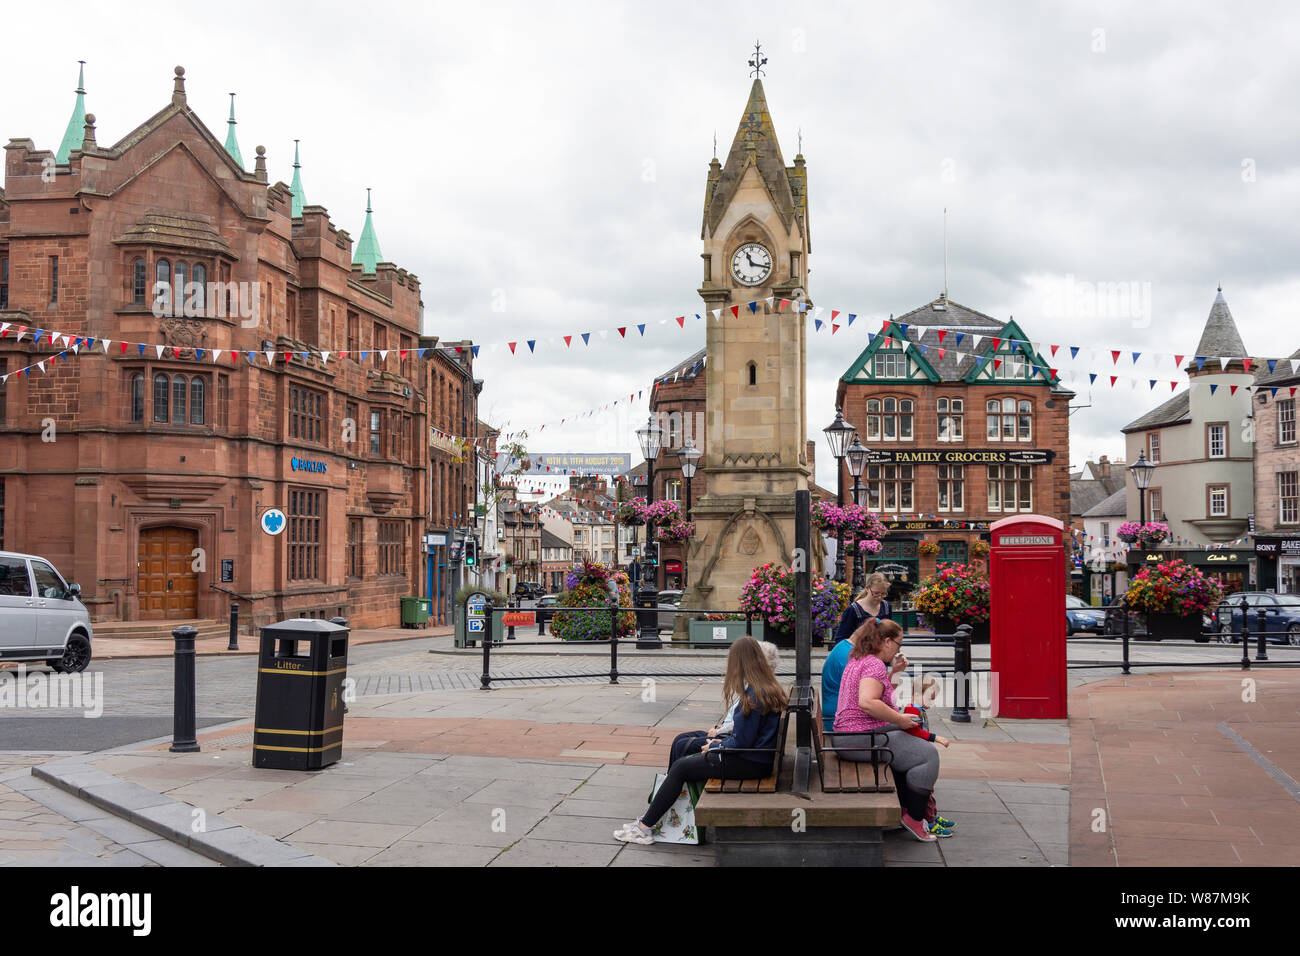 Market Square, Penrith, Cumbria, England, United Kingdom Stock Photo